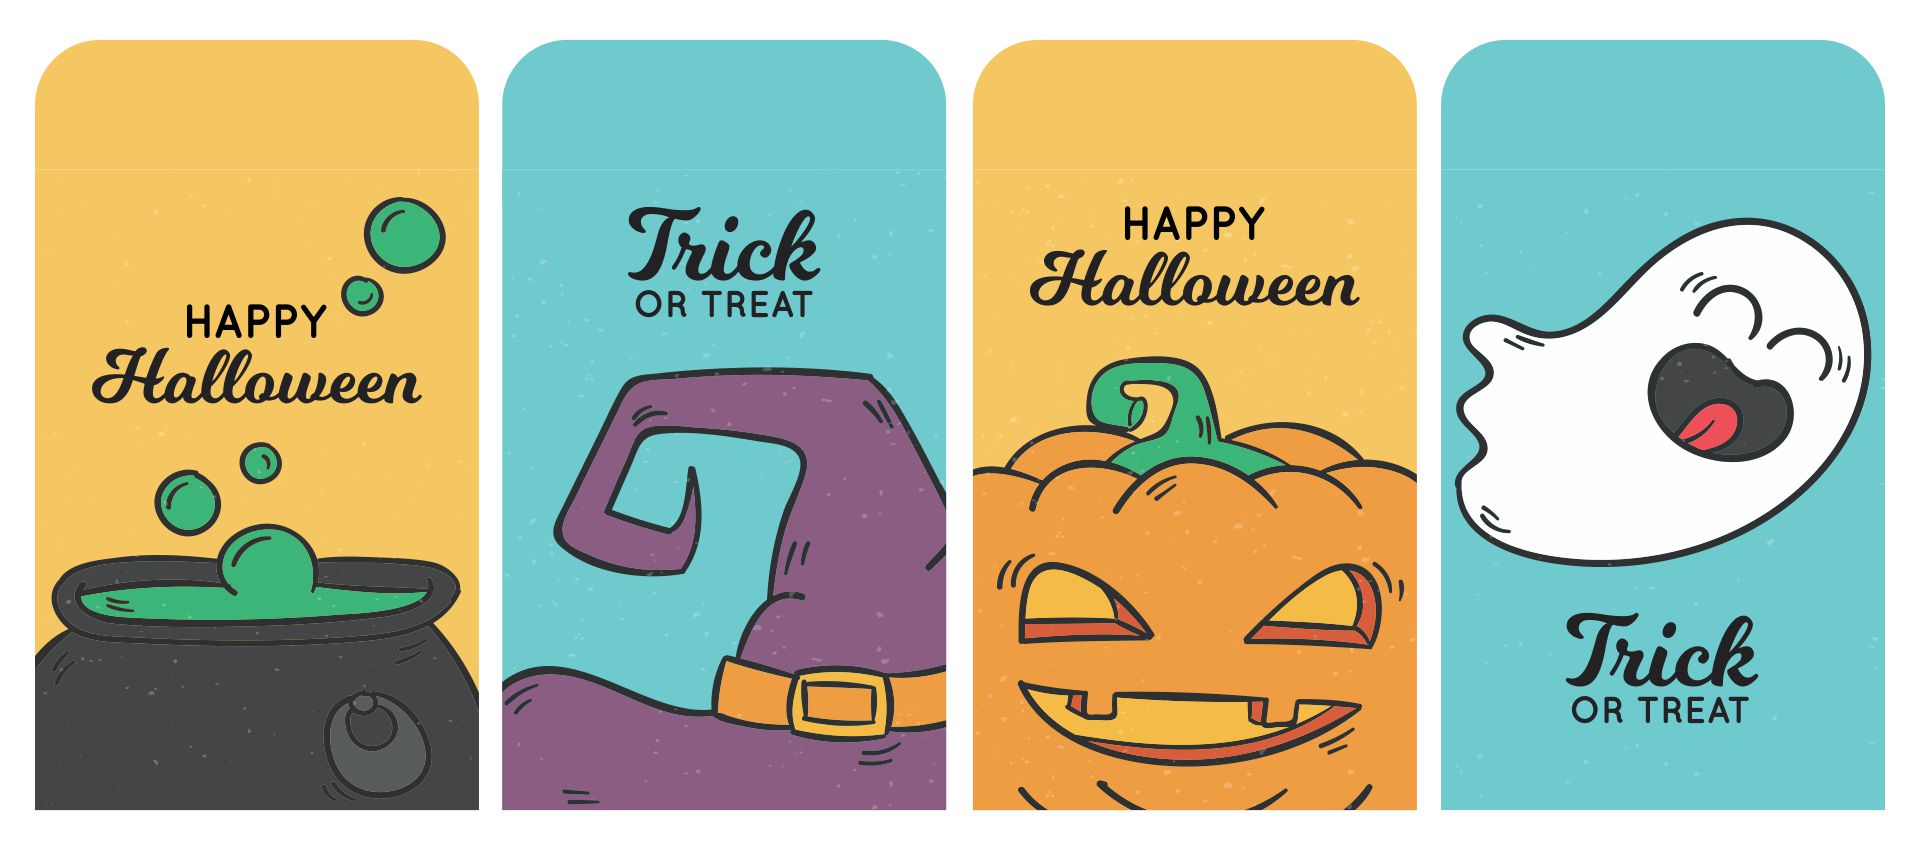 free-printable-personalized-halloween-gift-tags-printable-templates